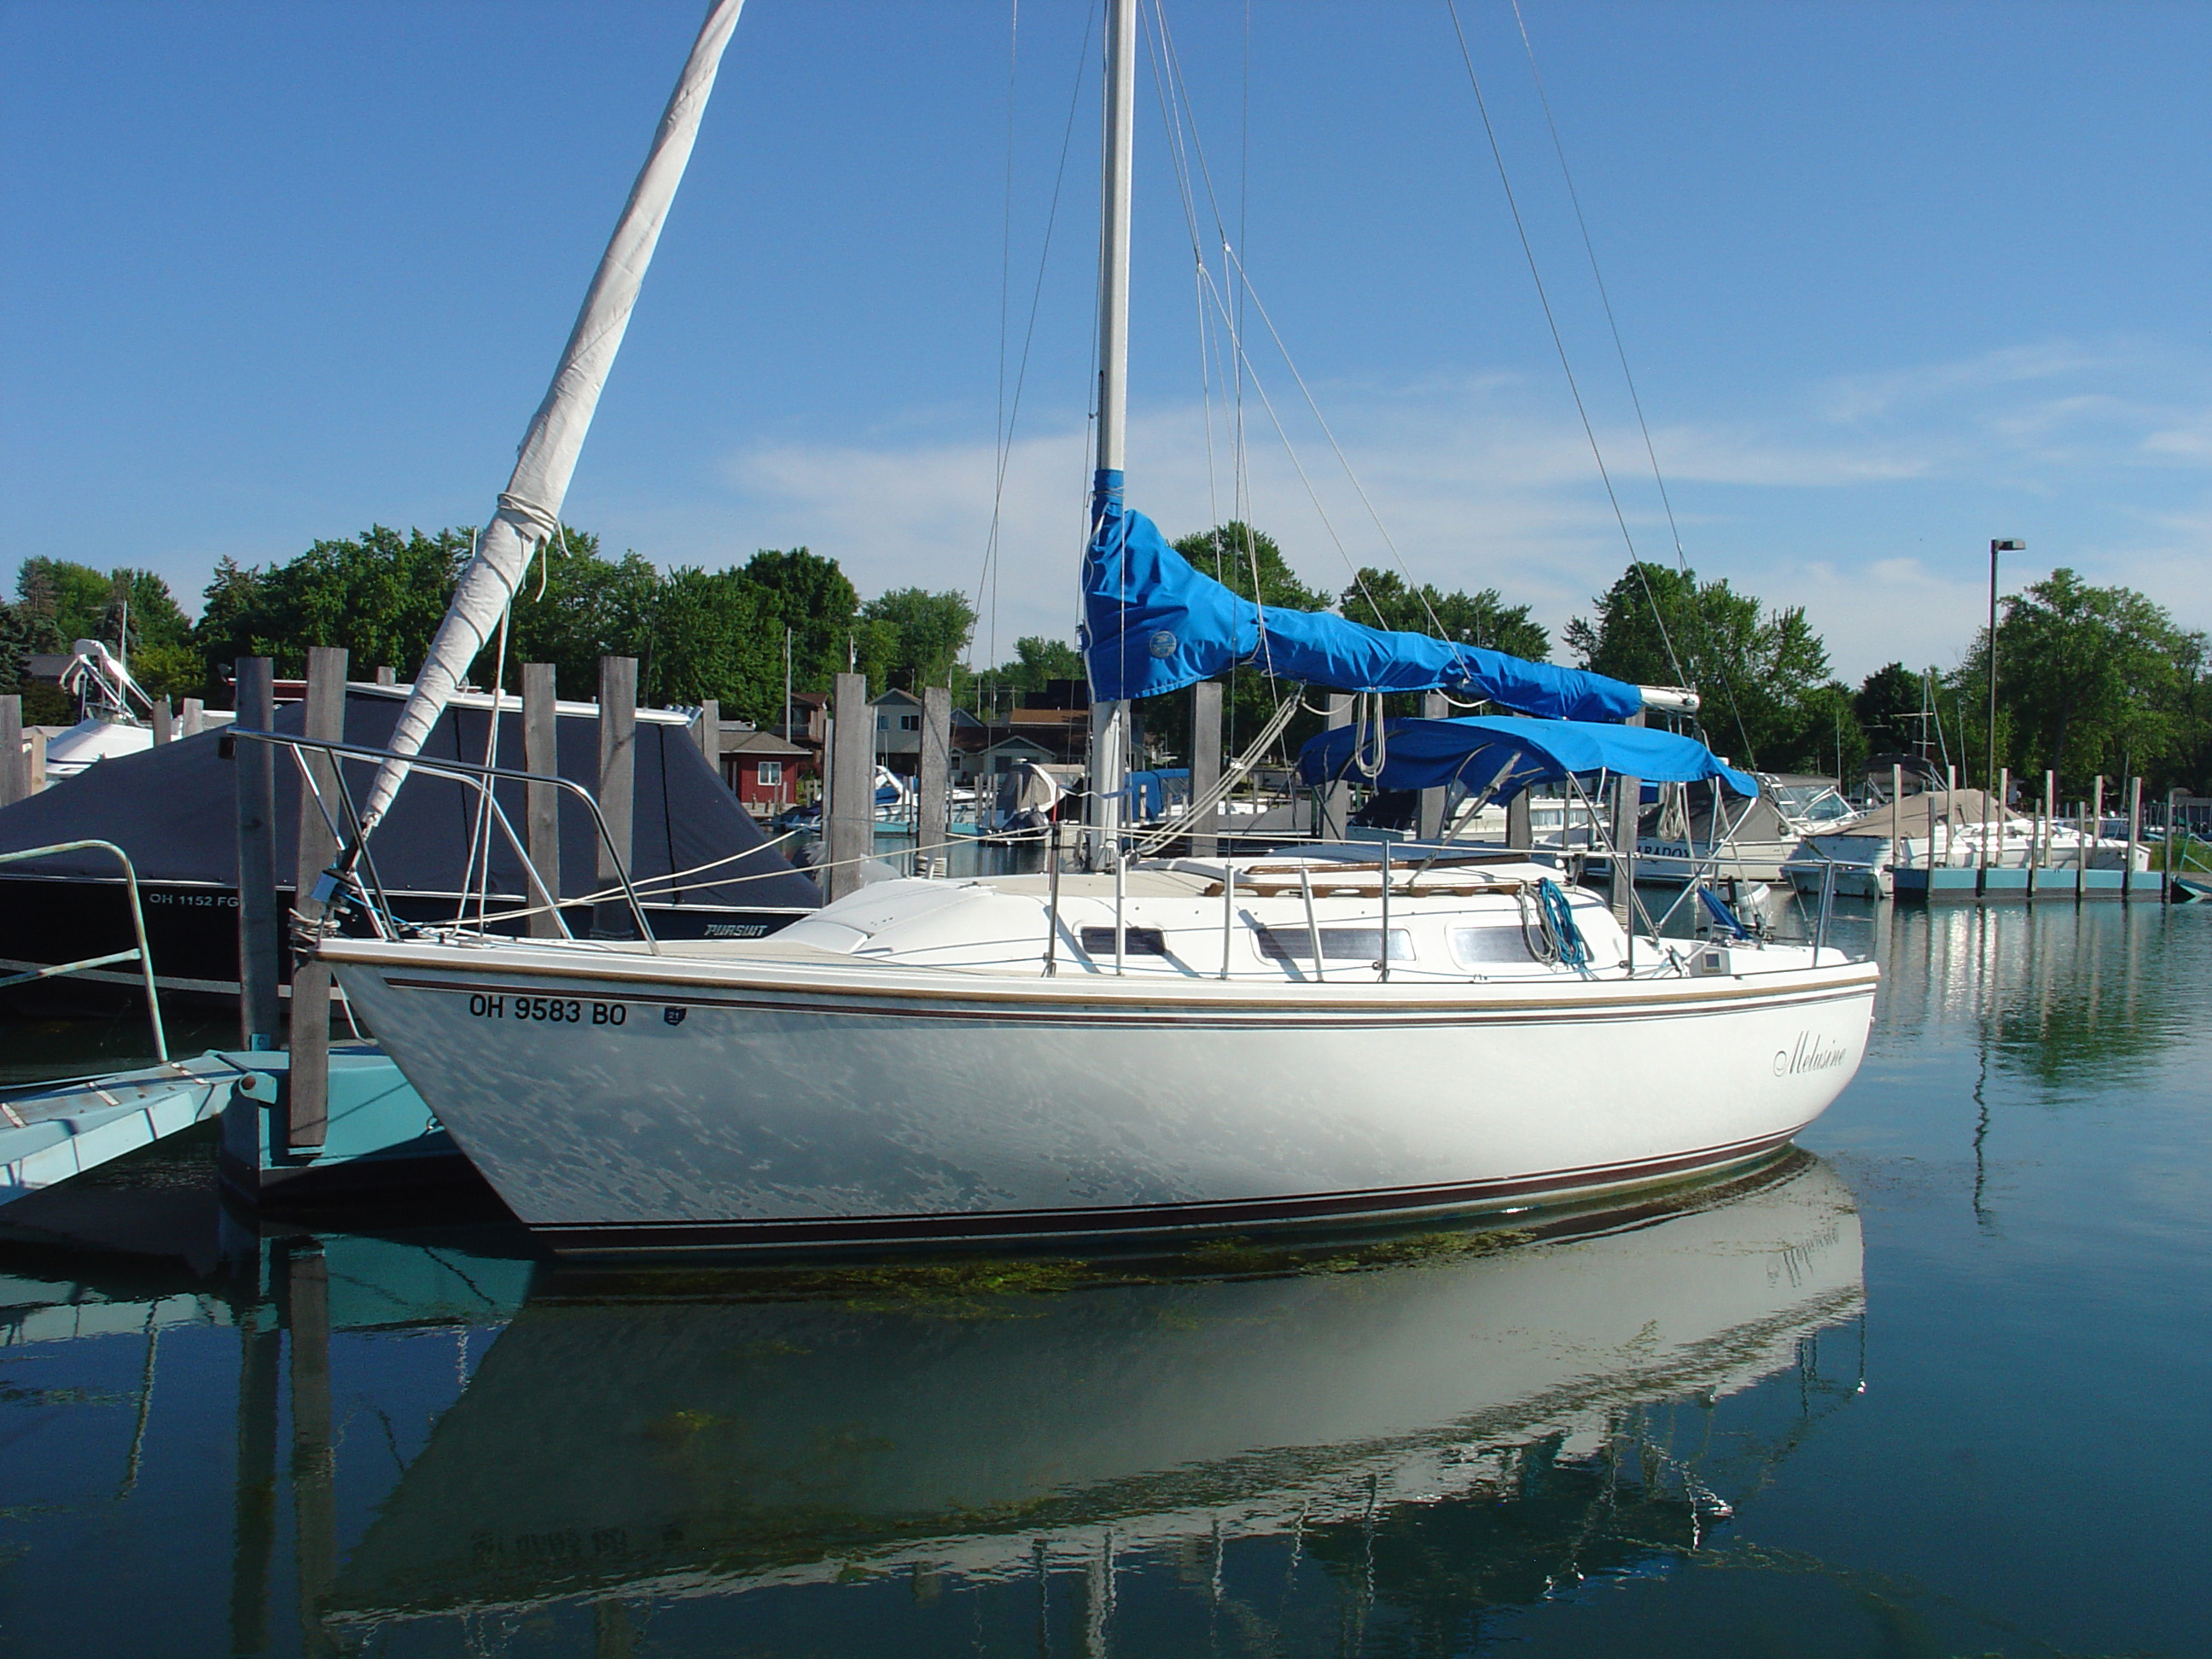 25 ft catalina sailboat